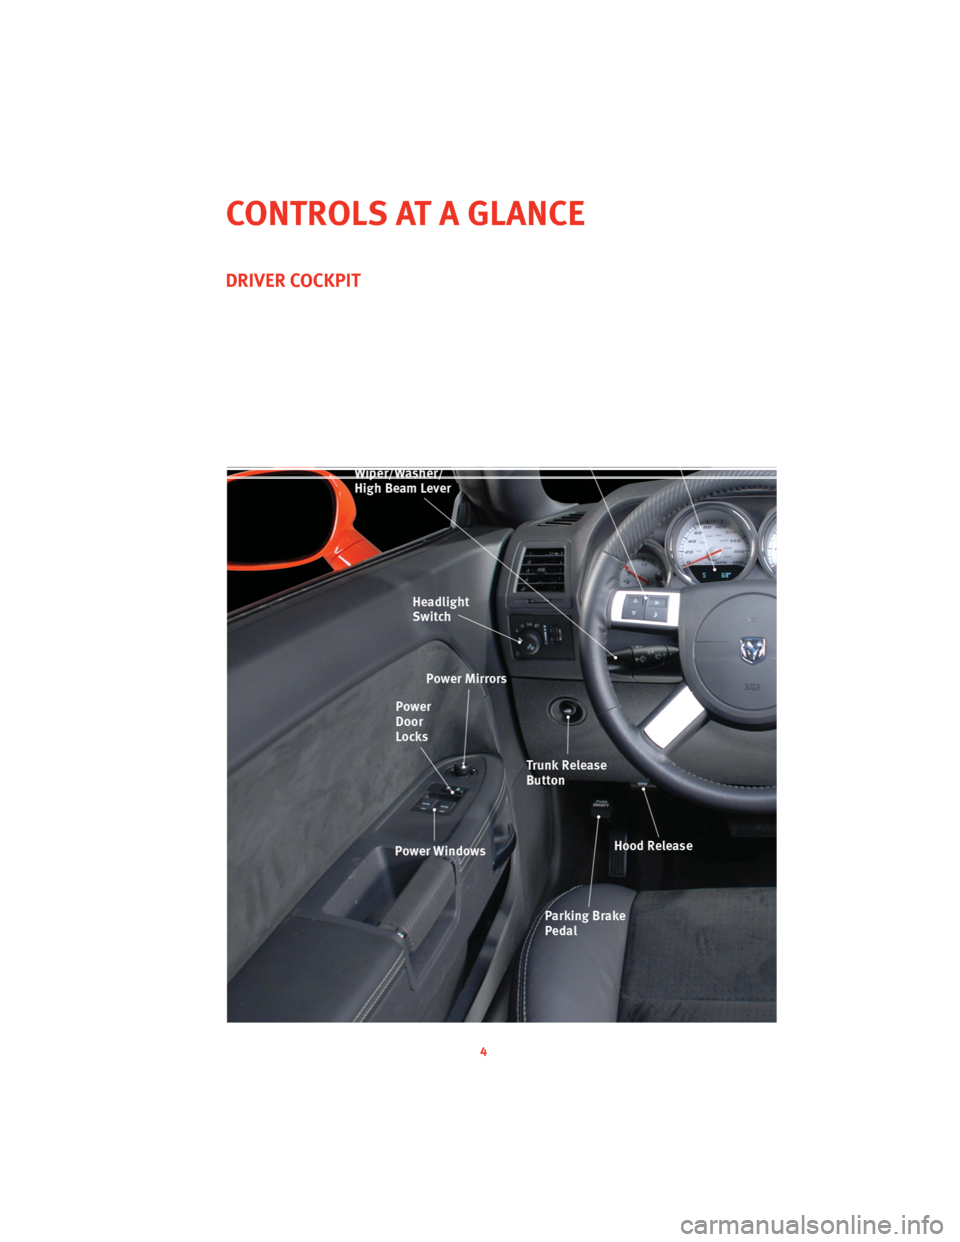 DODGE CHALLENGER 2010 3.G User Guide DRIVER COCKPIT
4
CONTROLS AT A GLANCE 